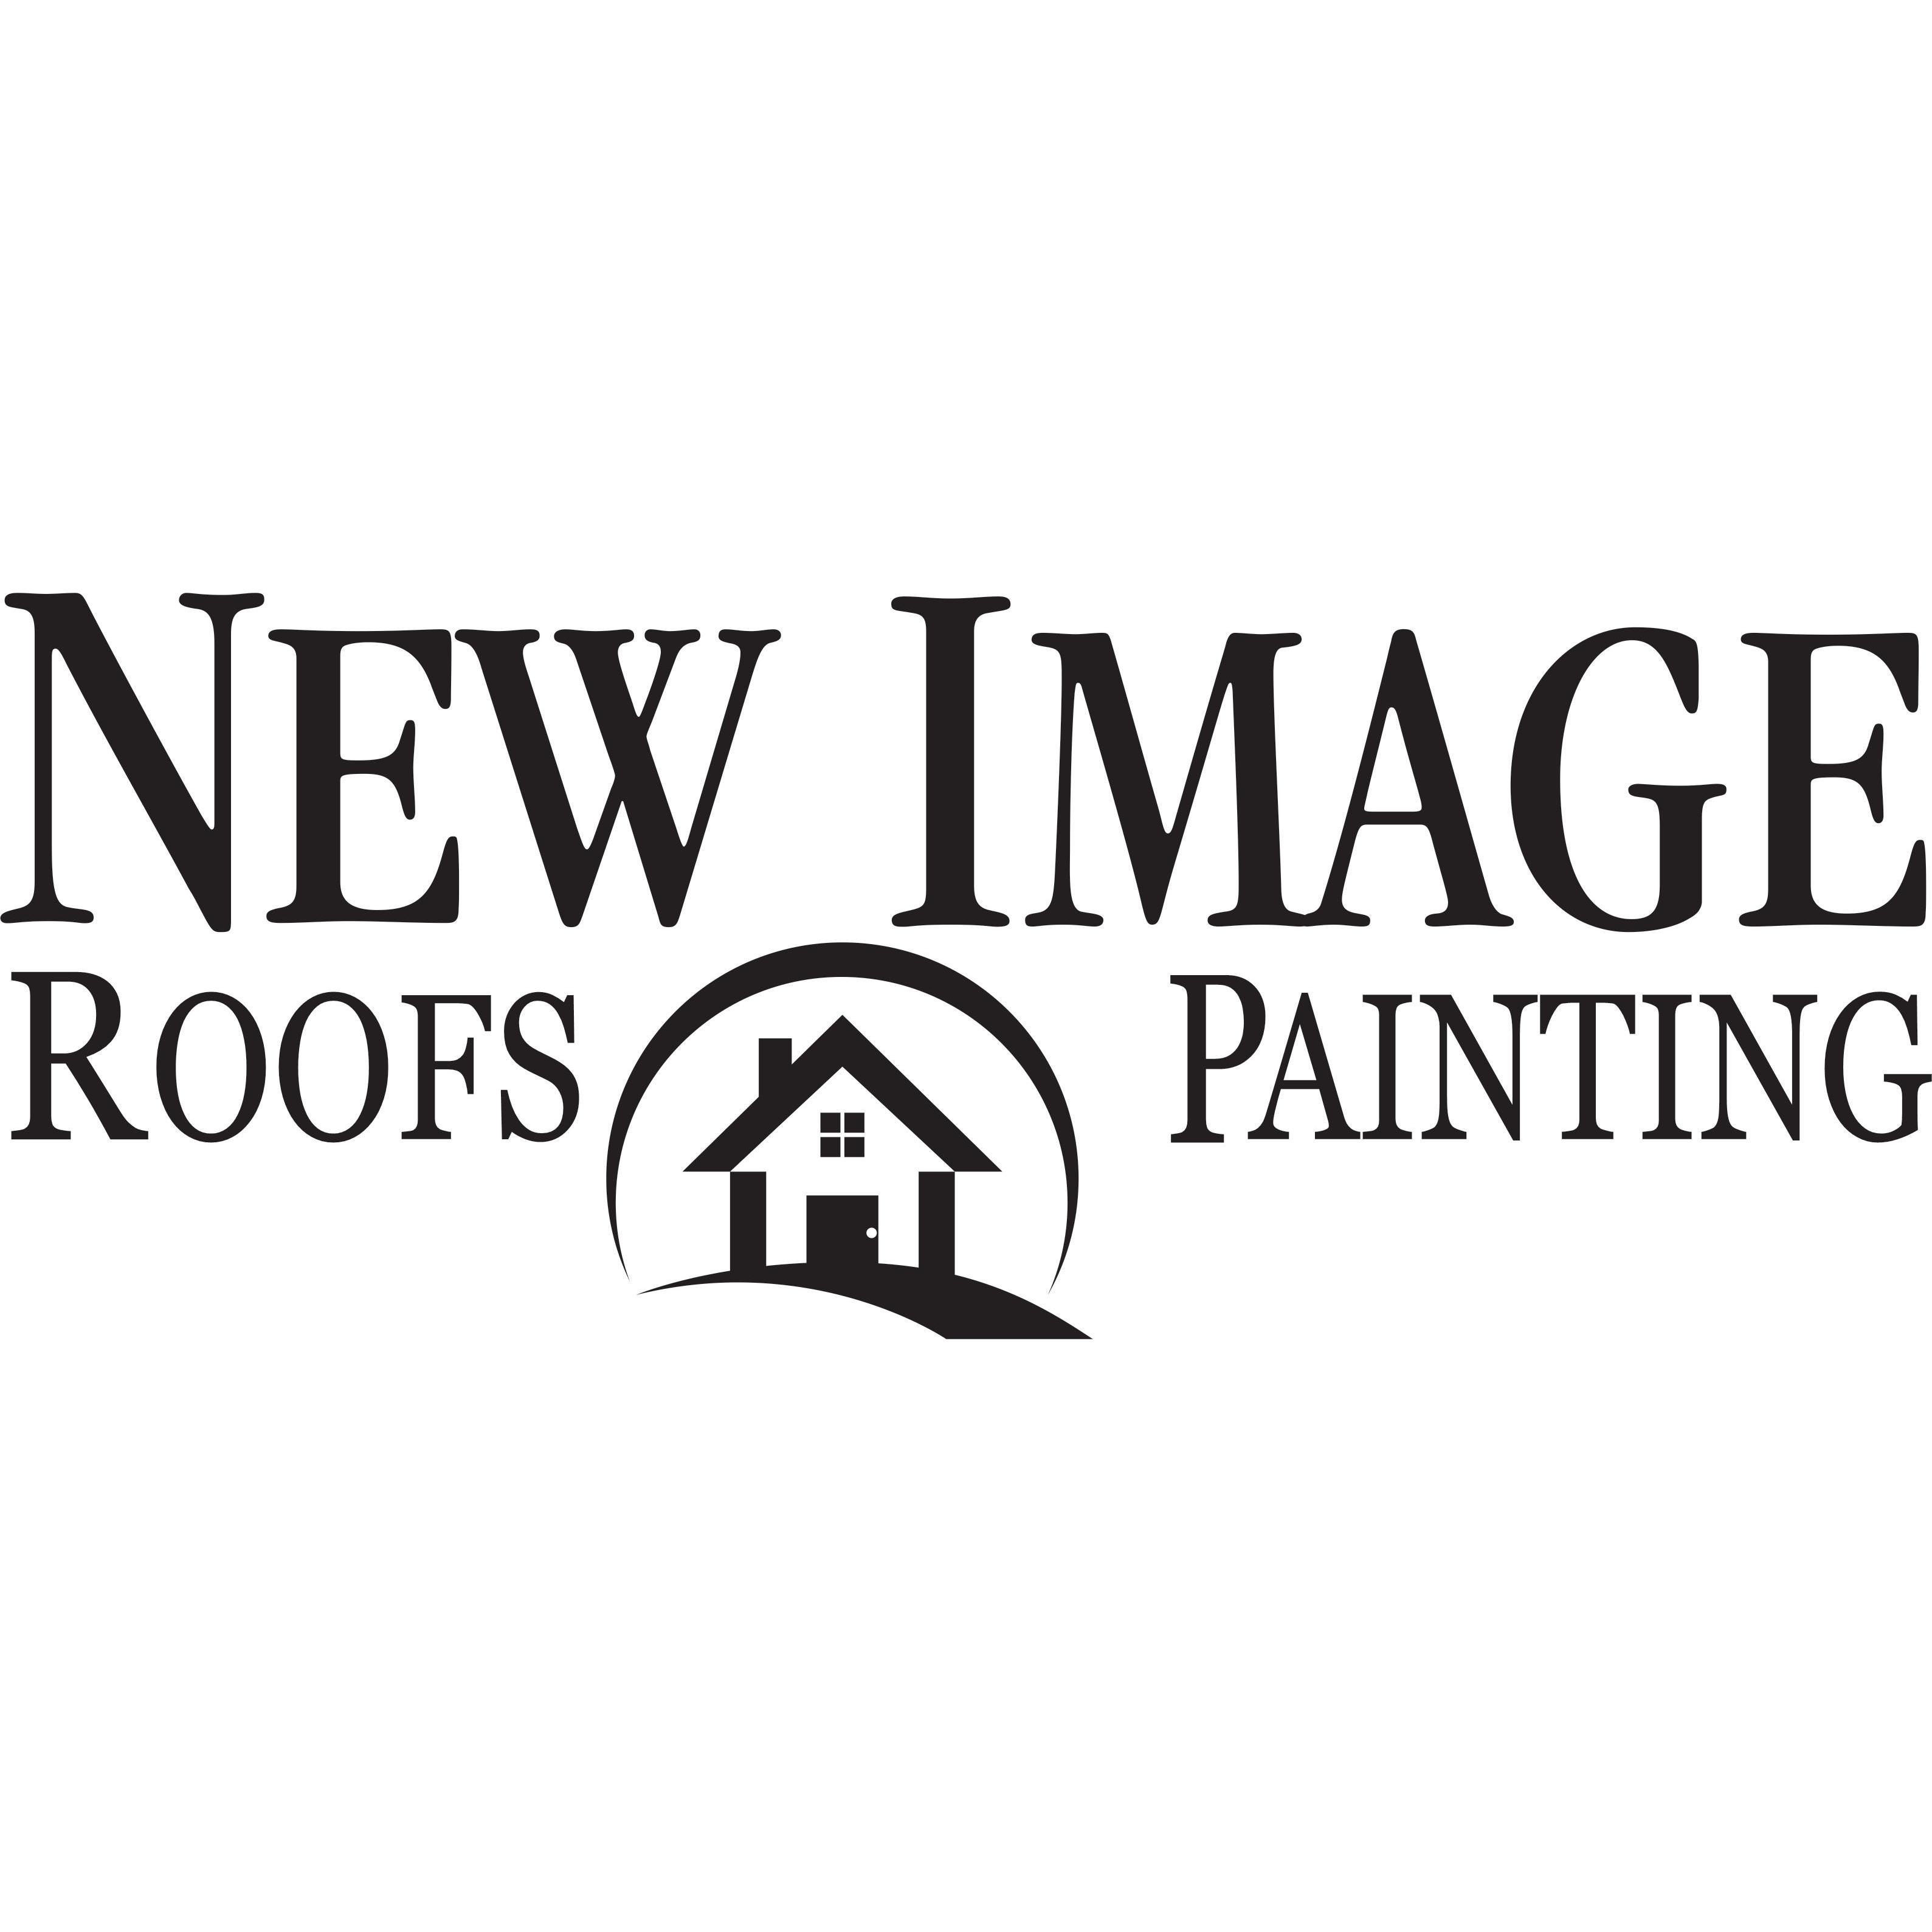 New Image Roofs & Painting - Dallas, GA - Dallas, GA 30157 - (678)921-3243 | ShowMeLocal.com